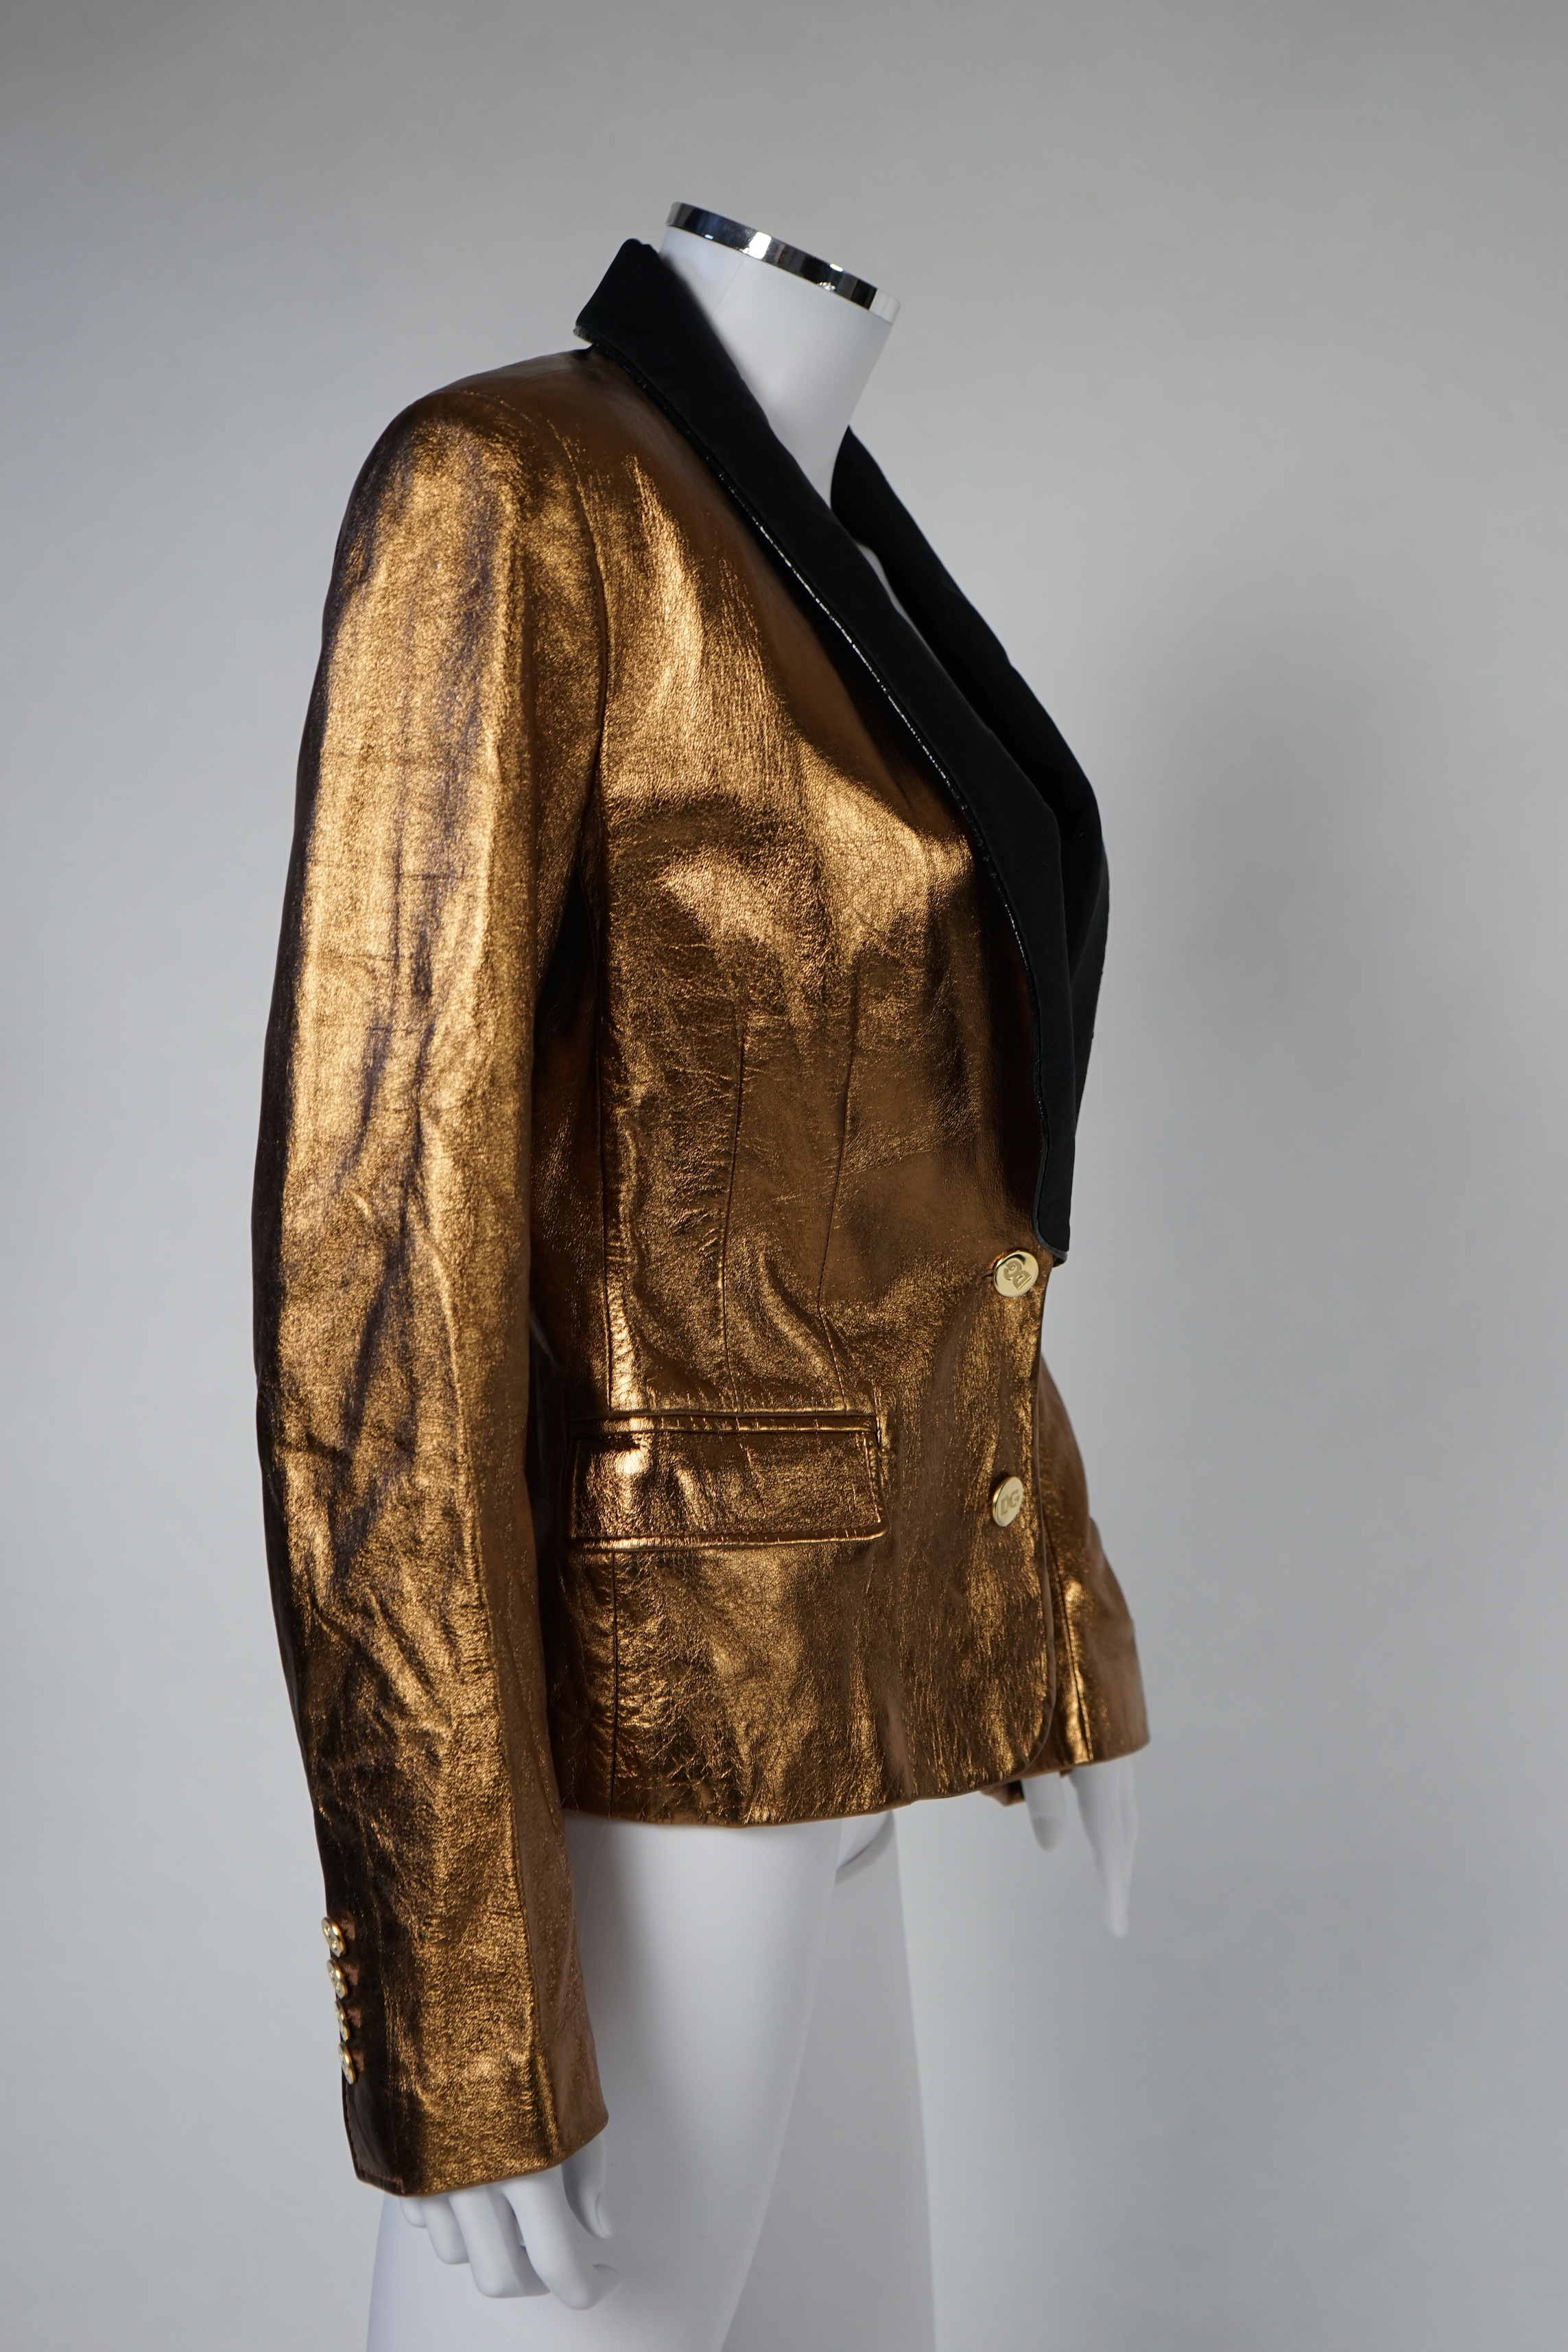 A lady's Dolce & Gabbana gold metallic leather jacket, size 42